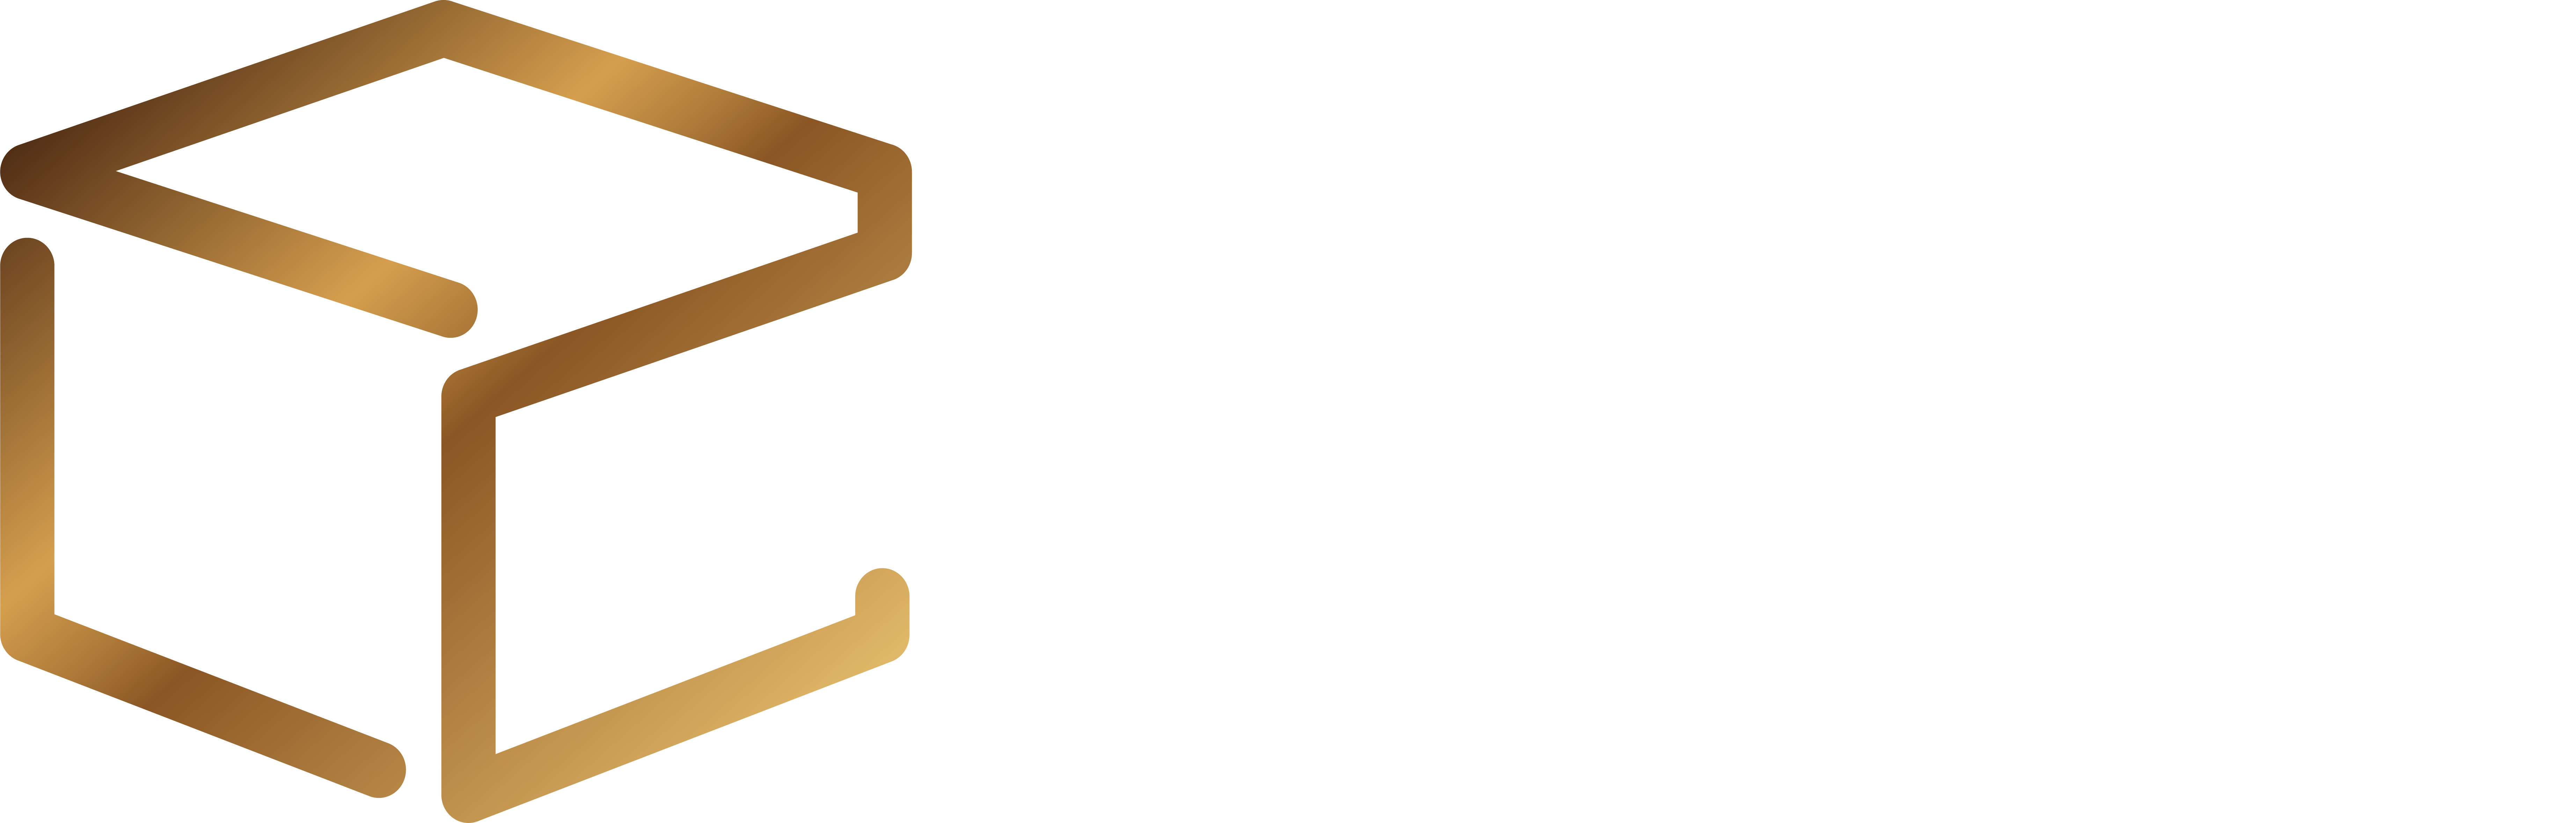 luxecubes logo